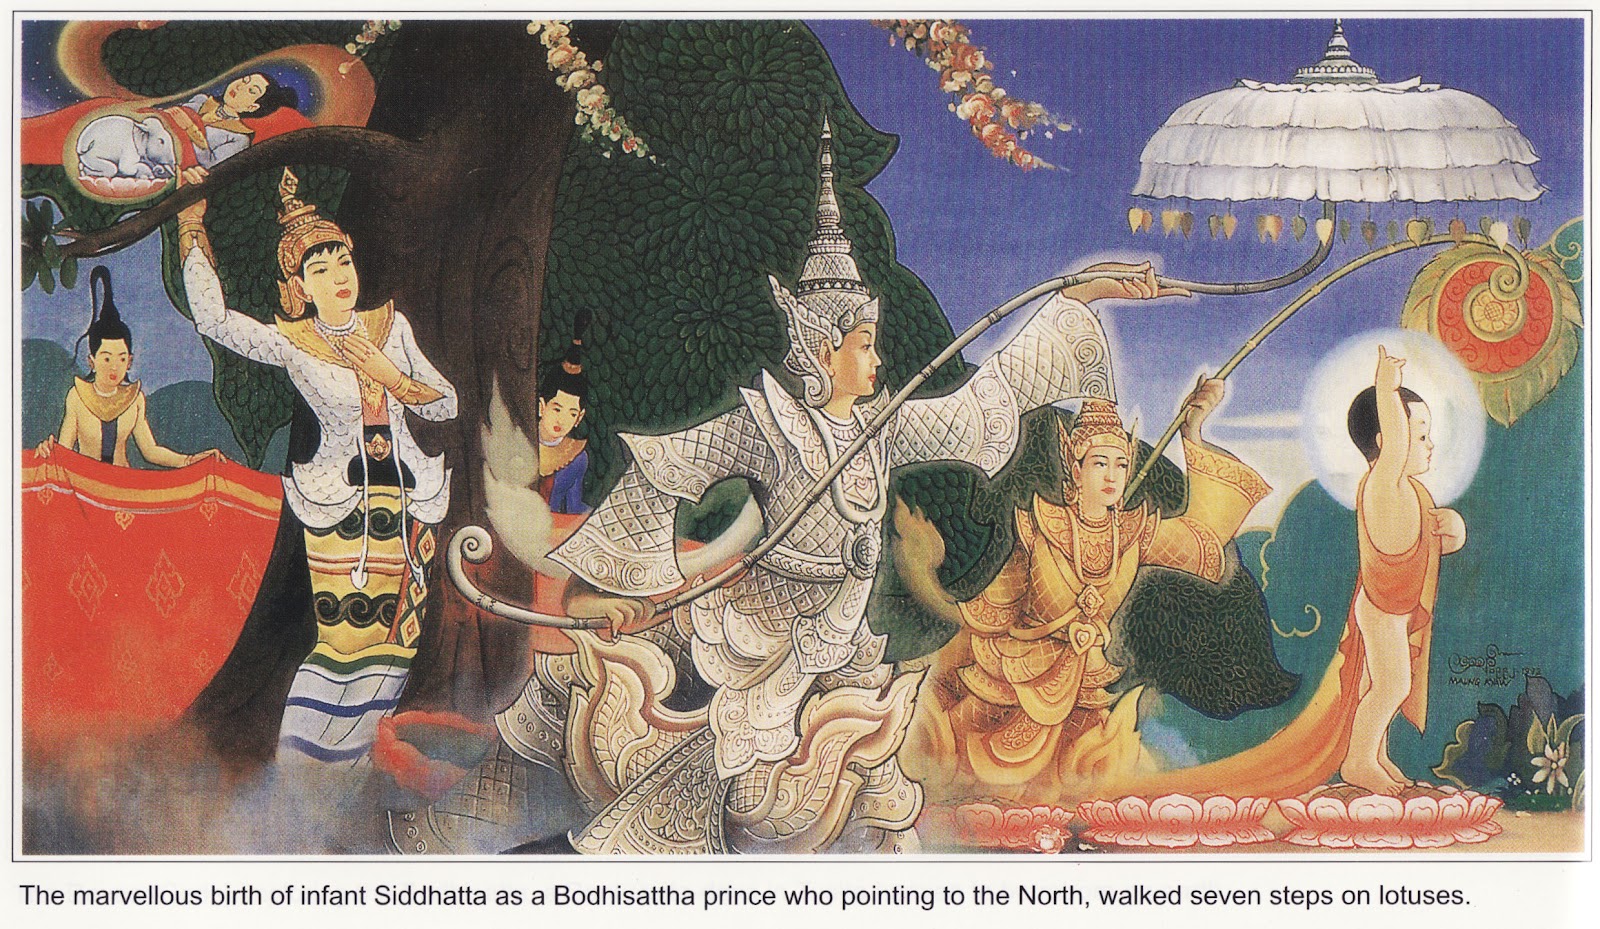 siddhartha's journey